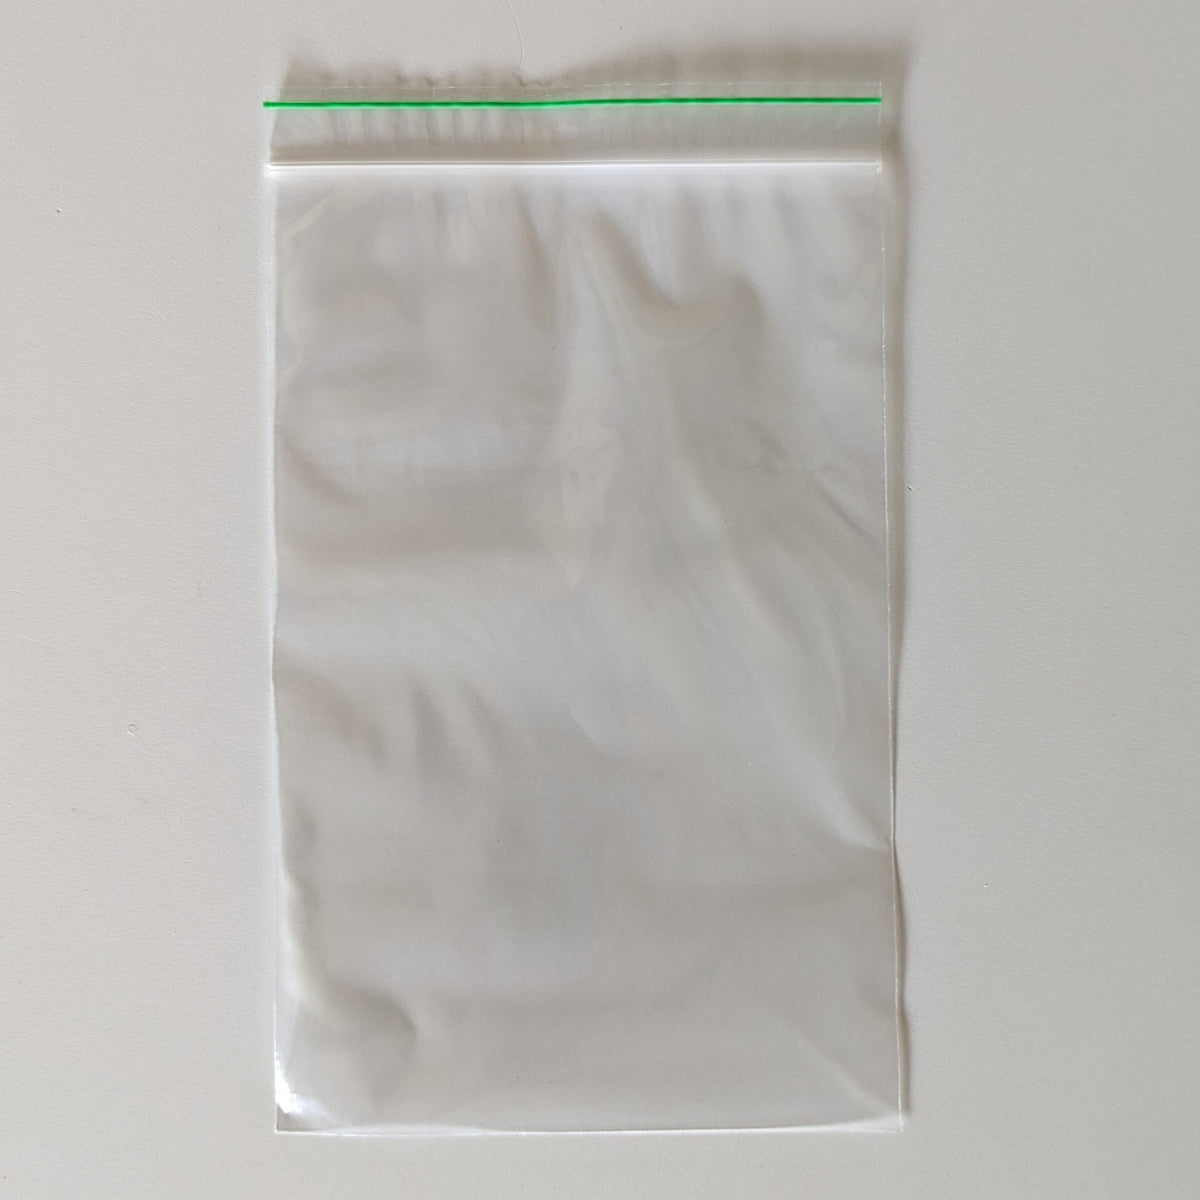 Ziplock Bag - 1 Quart